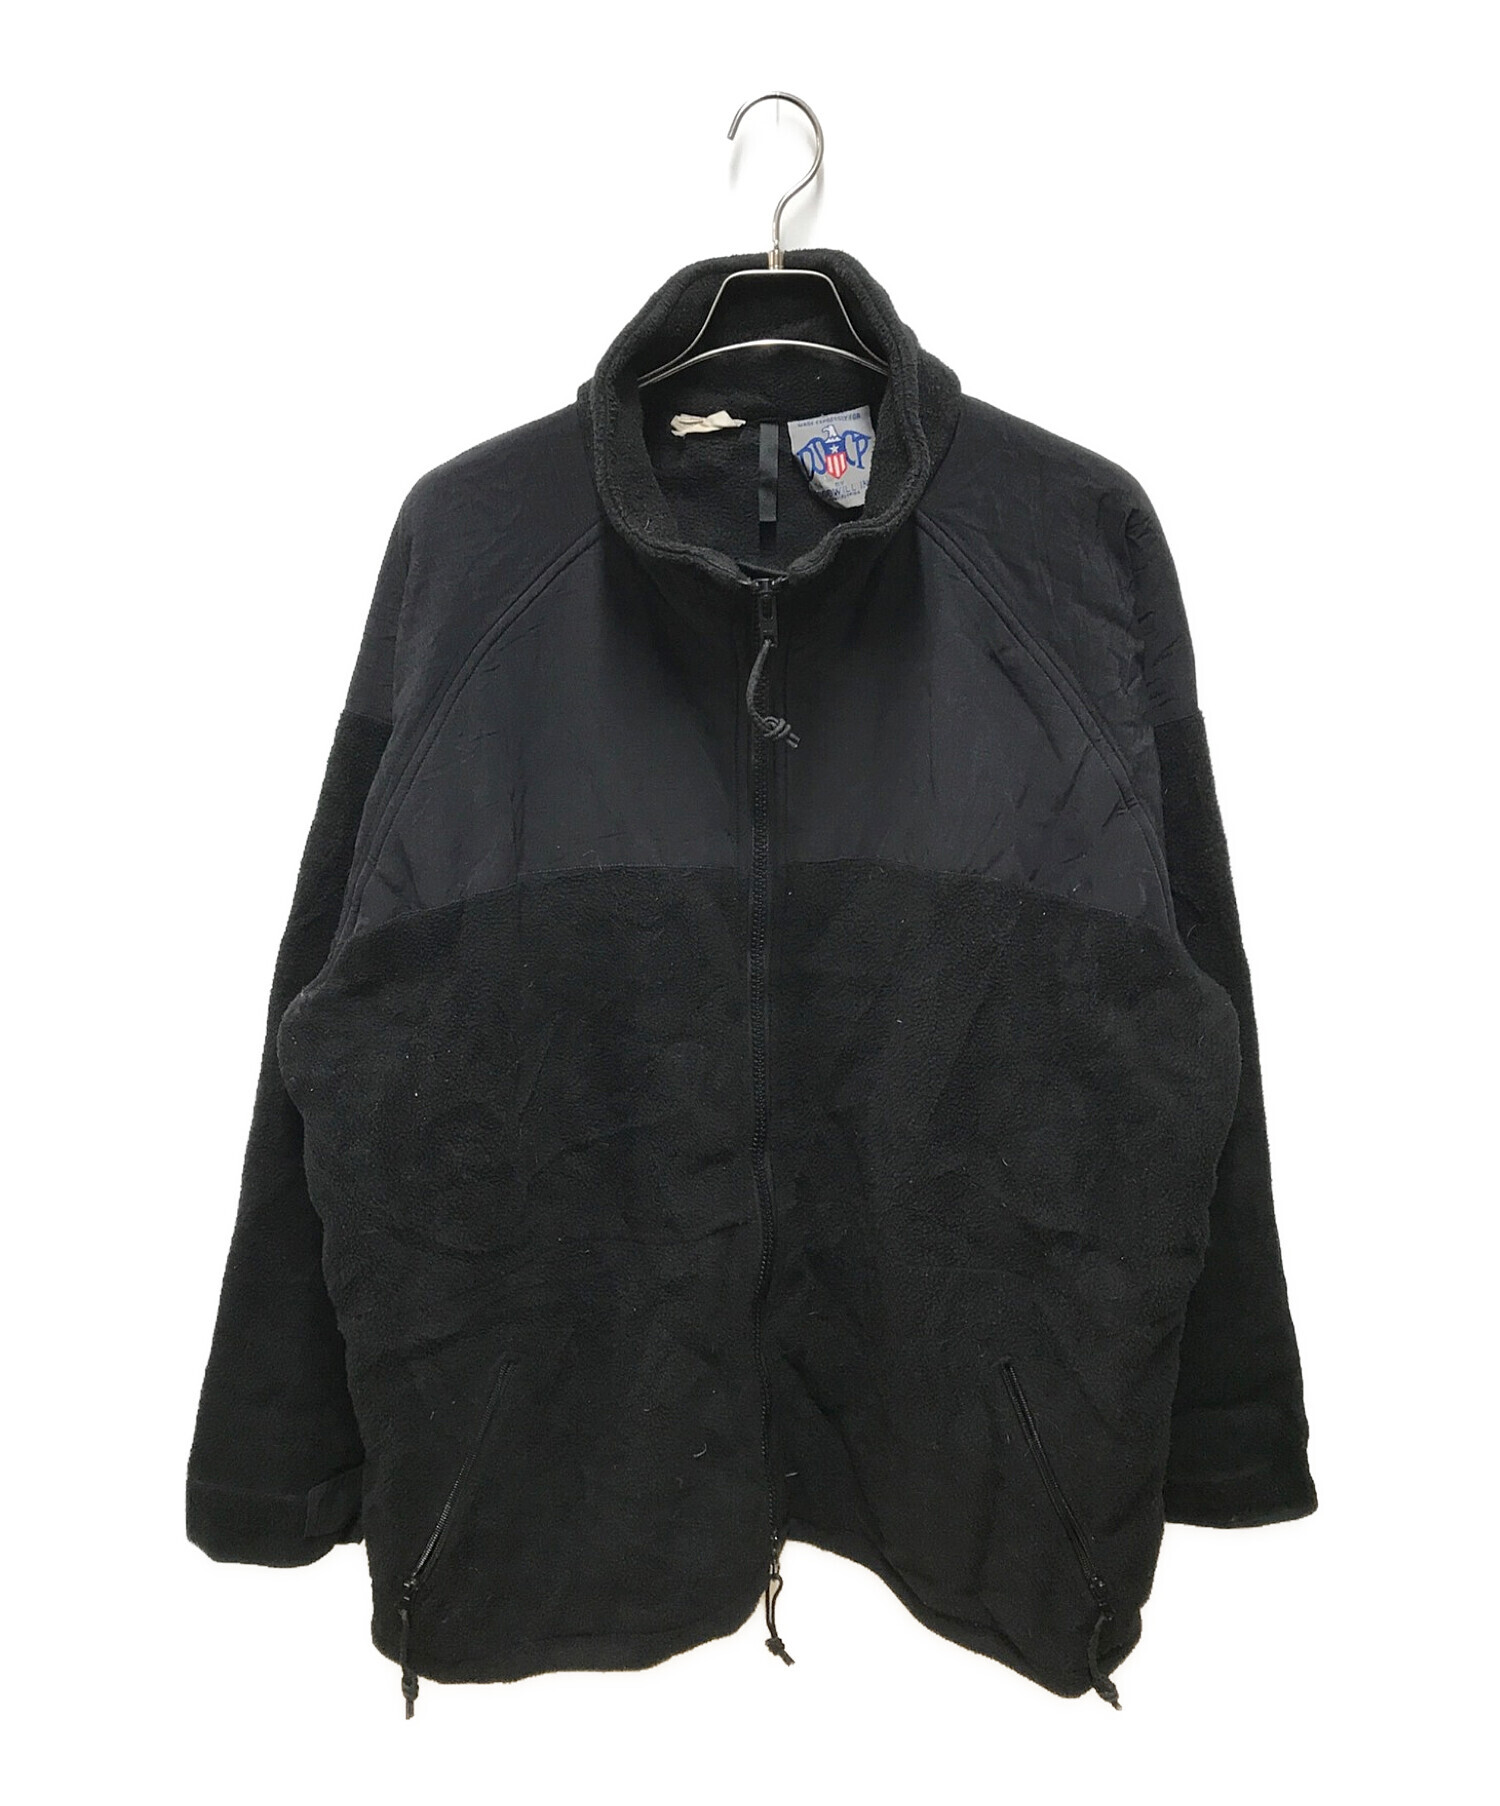 GOODWILL (グッドウィル) ECWCS GEN2 LEVEL 3 Polartec Fleece Jacket ブラック サイズ:XL